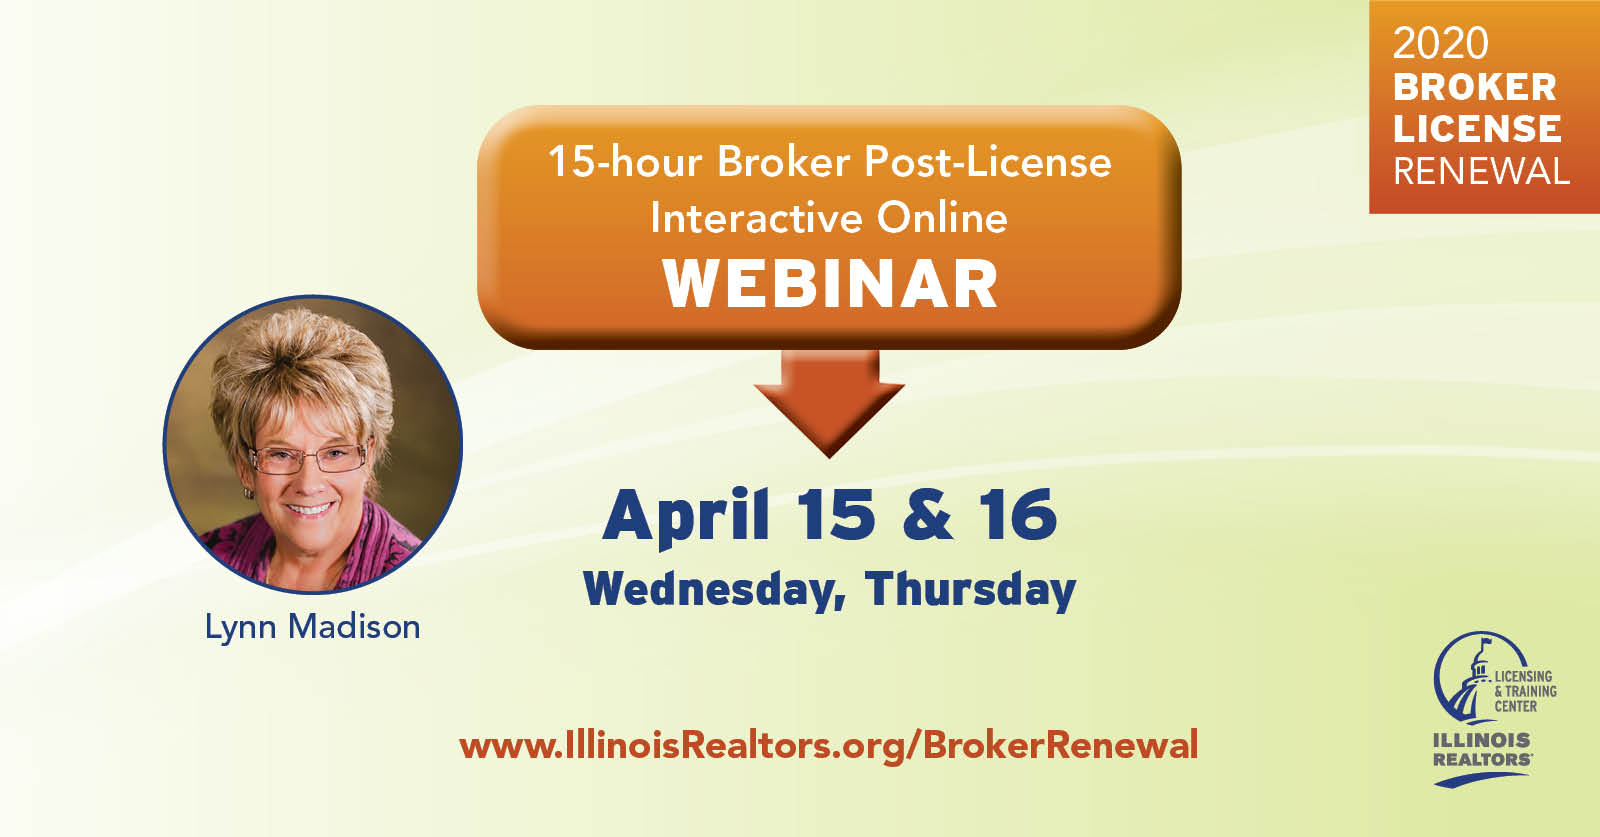 April 15 & 16 Broker Post-License Webinar